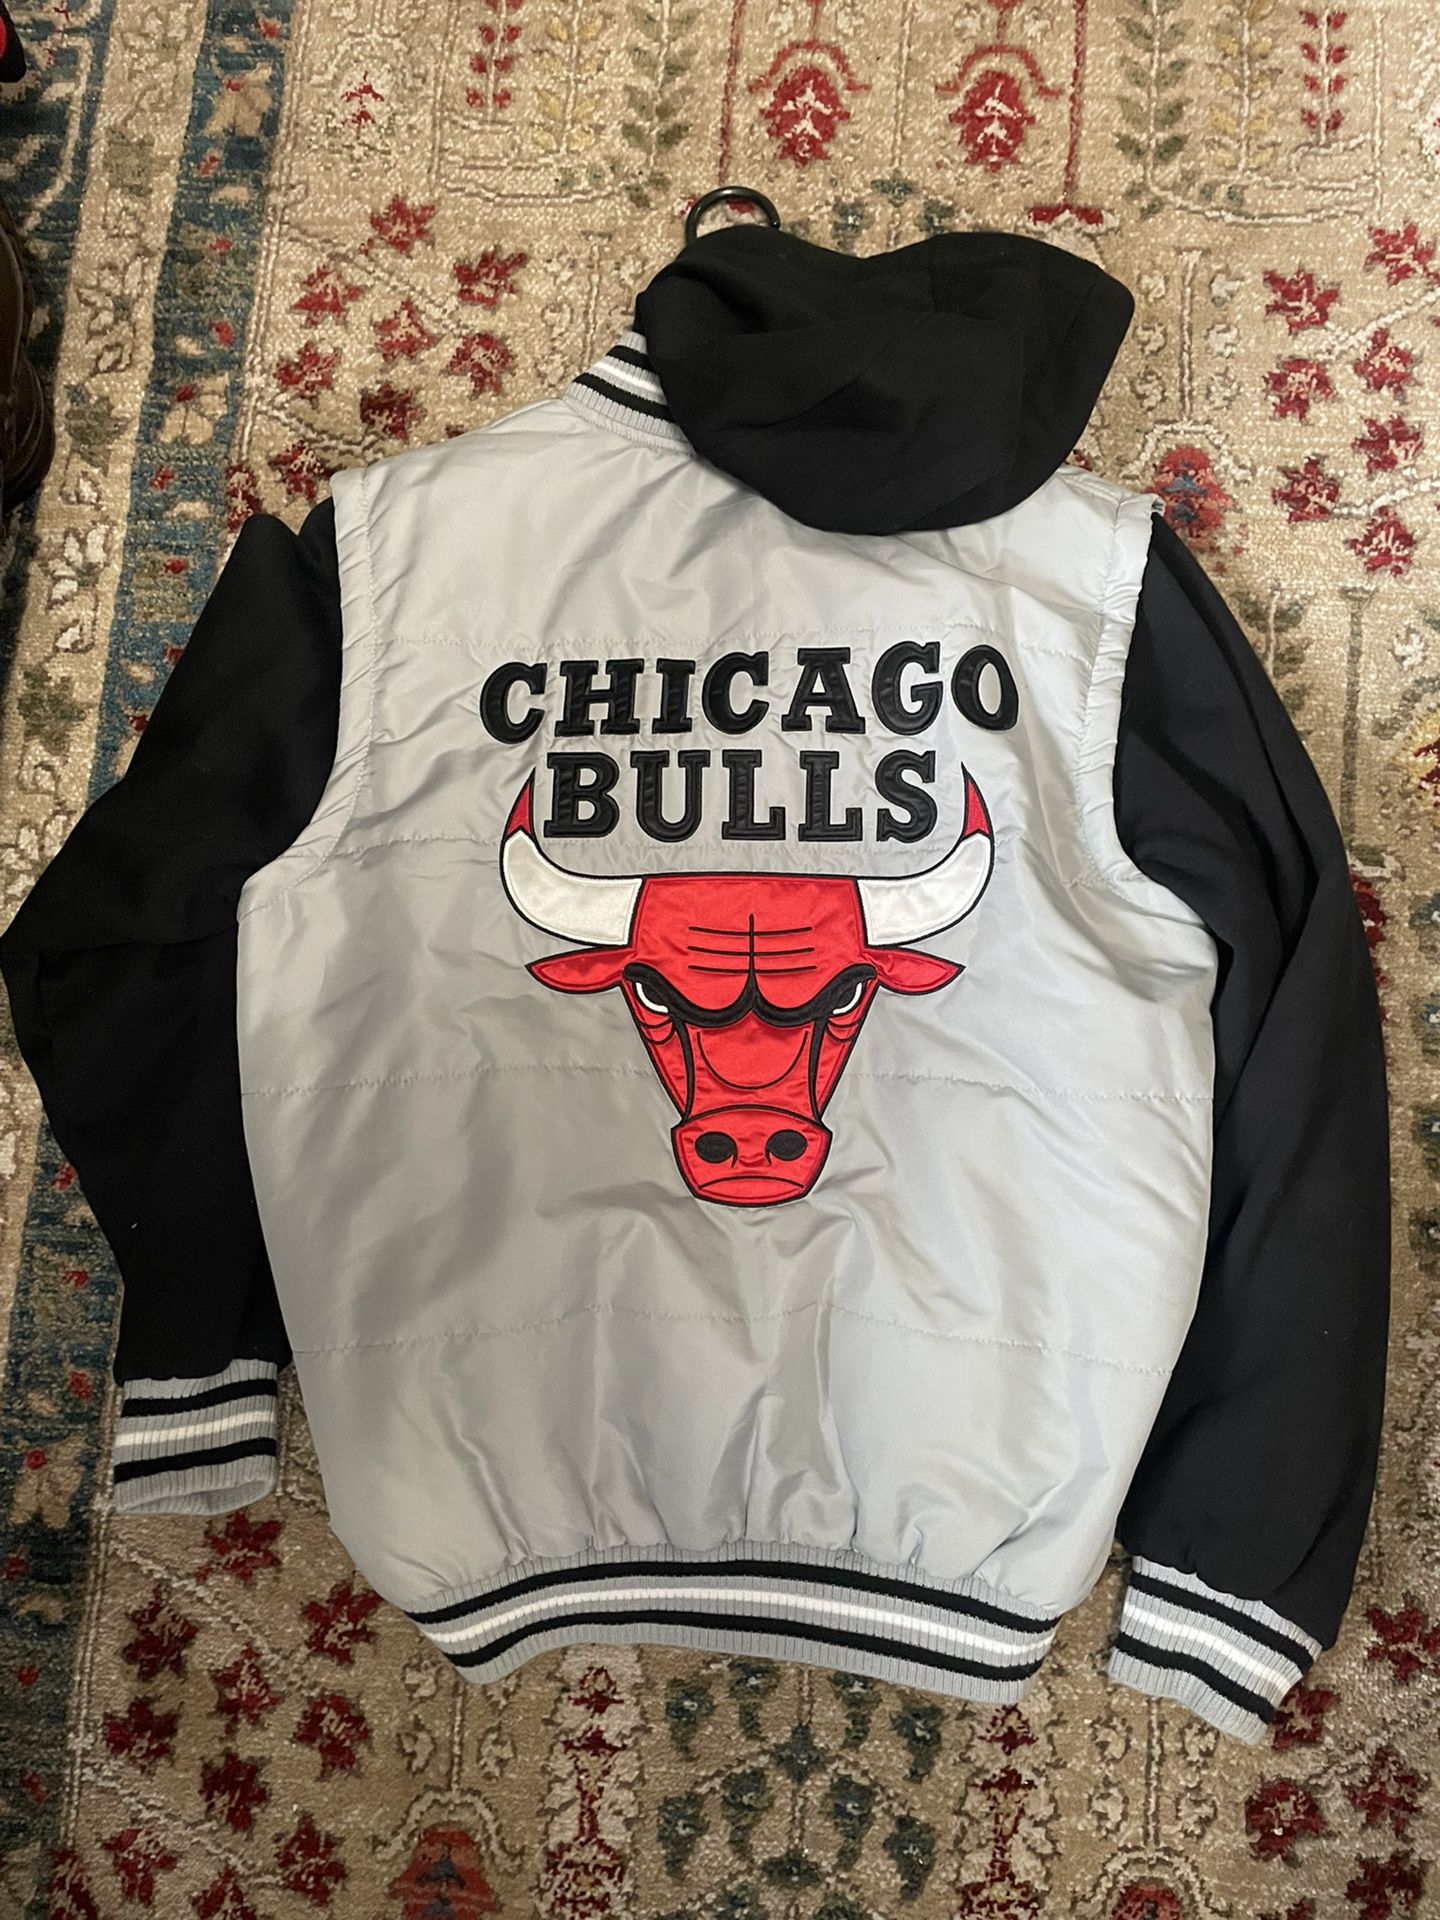 Chicago Bulls Jacket Sweater Vest 